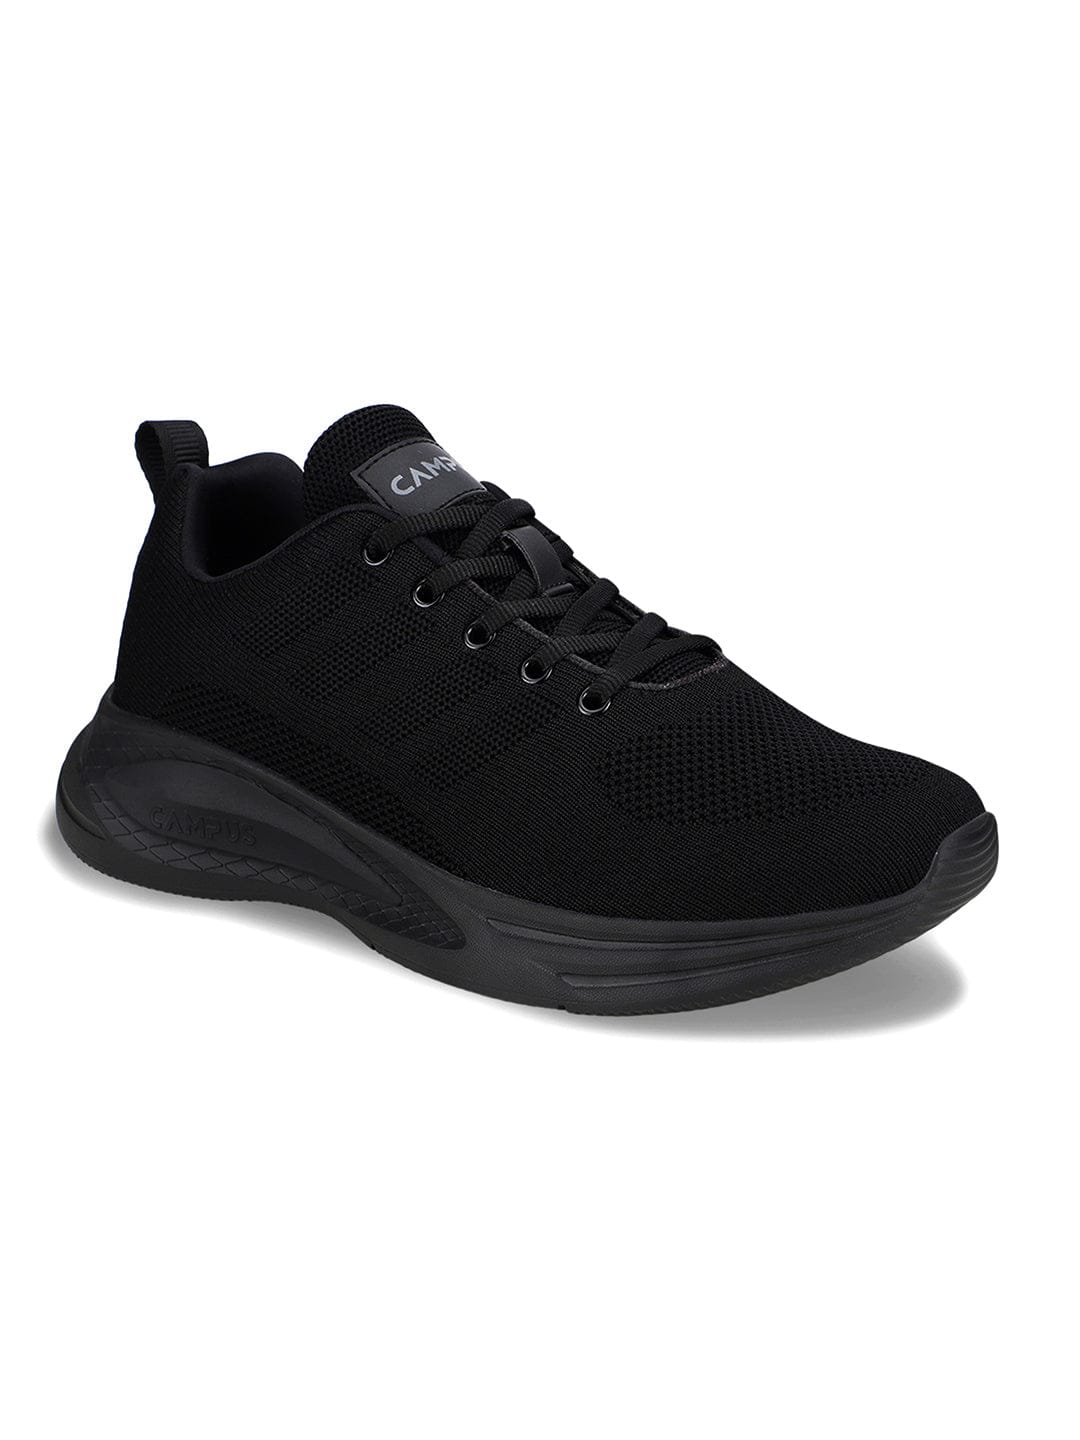 Buy MAXIMUS G-4 Black Men's Running Shoes online | Campus Shoes